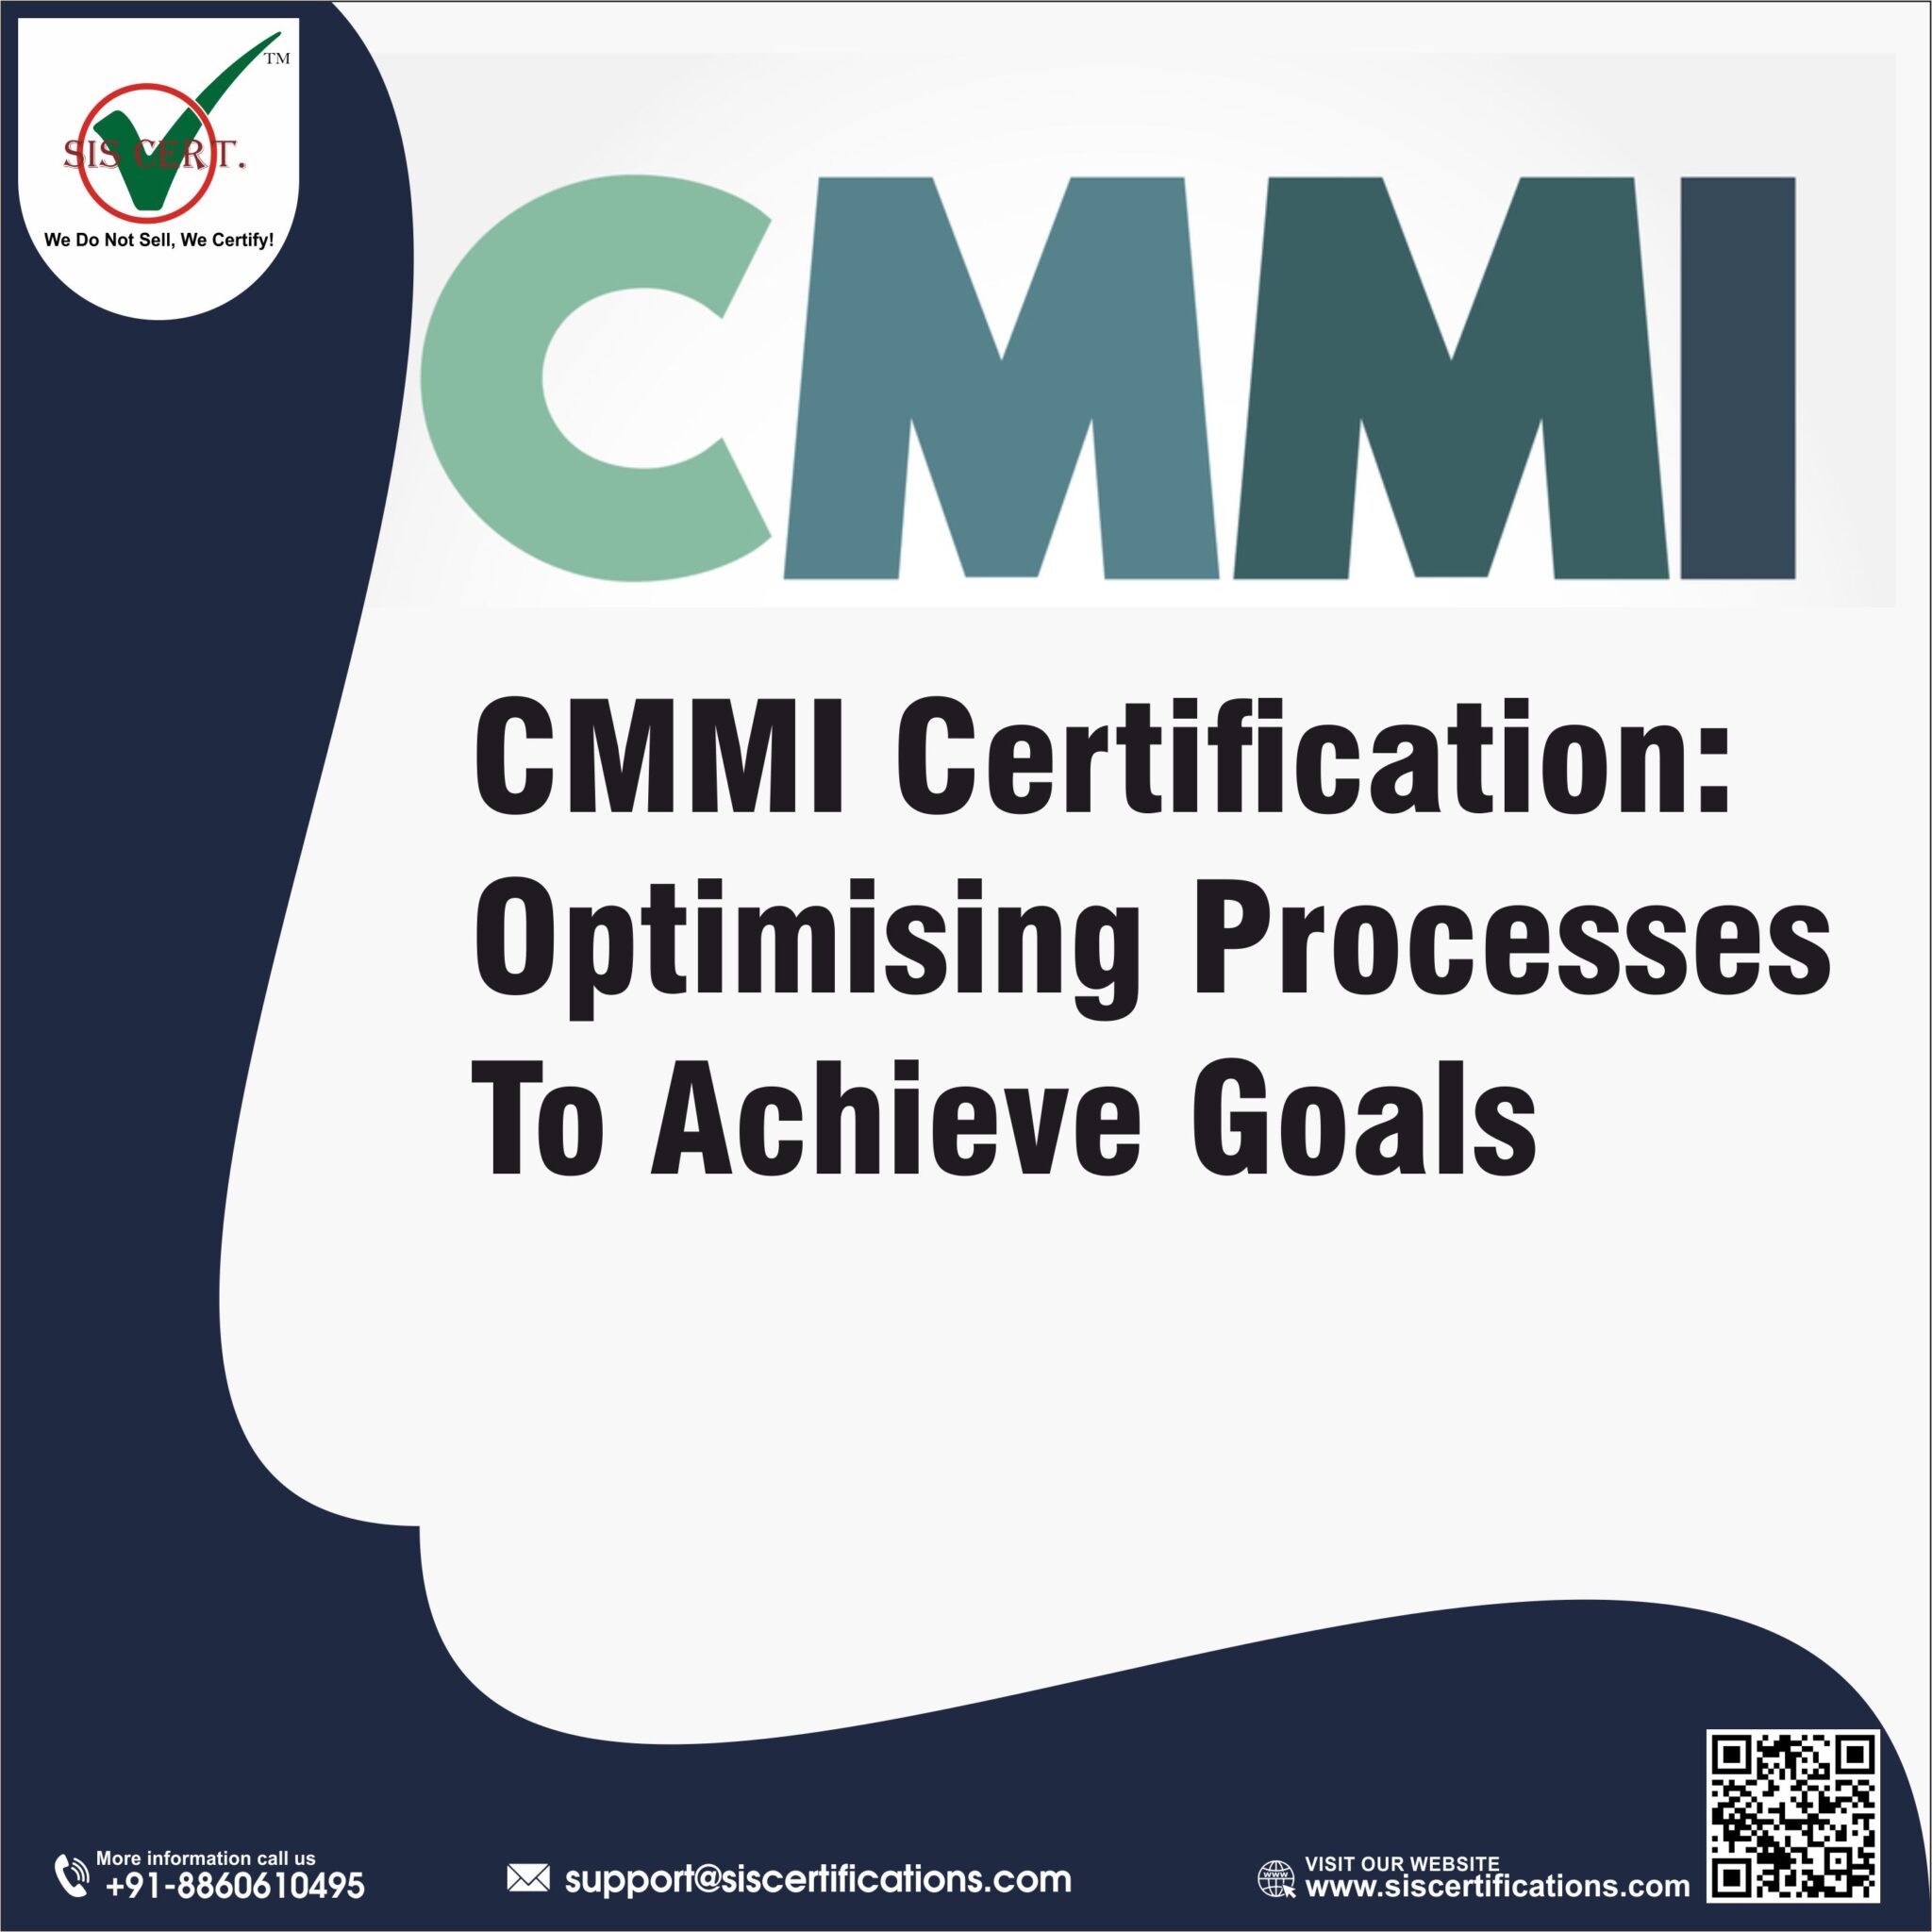 CMMI Certification: Optimising Processes To Achieve Goals